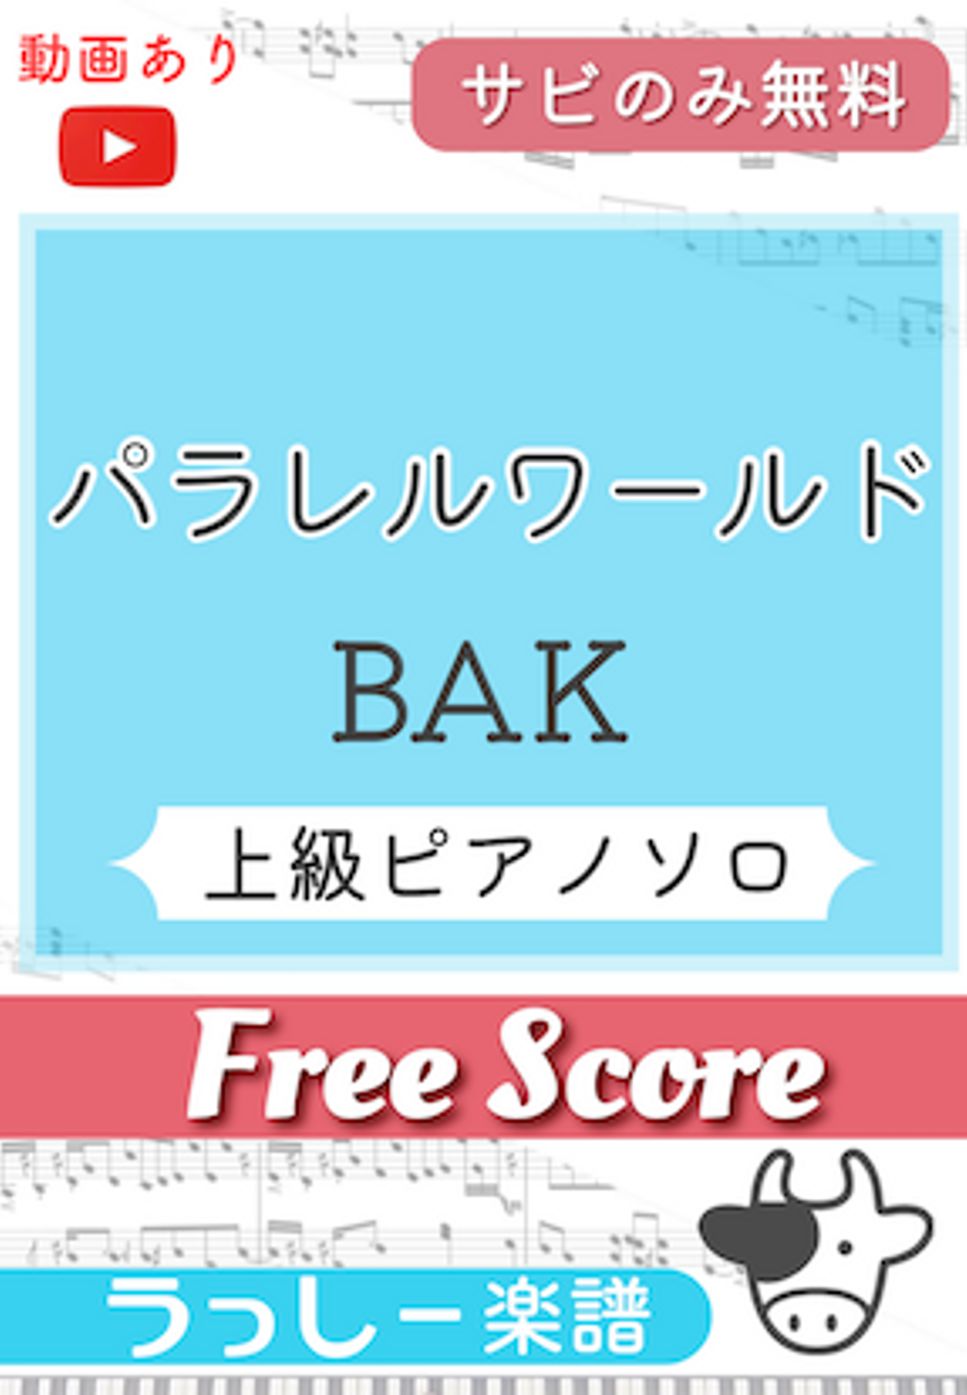 BAK - パラレルワールド (サビのみ無料) by 牛武奏人